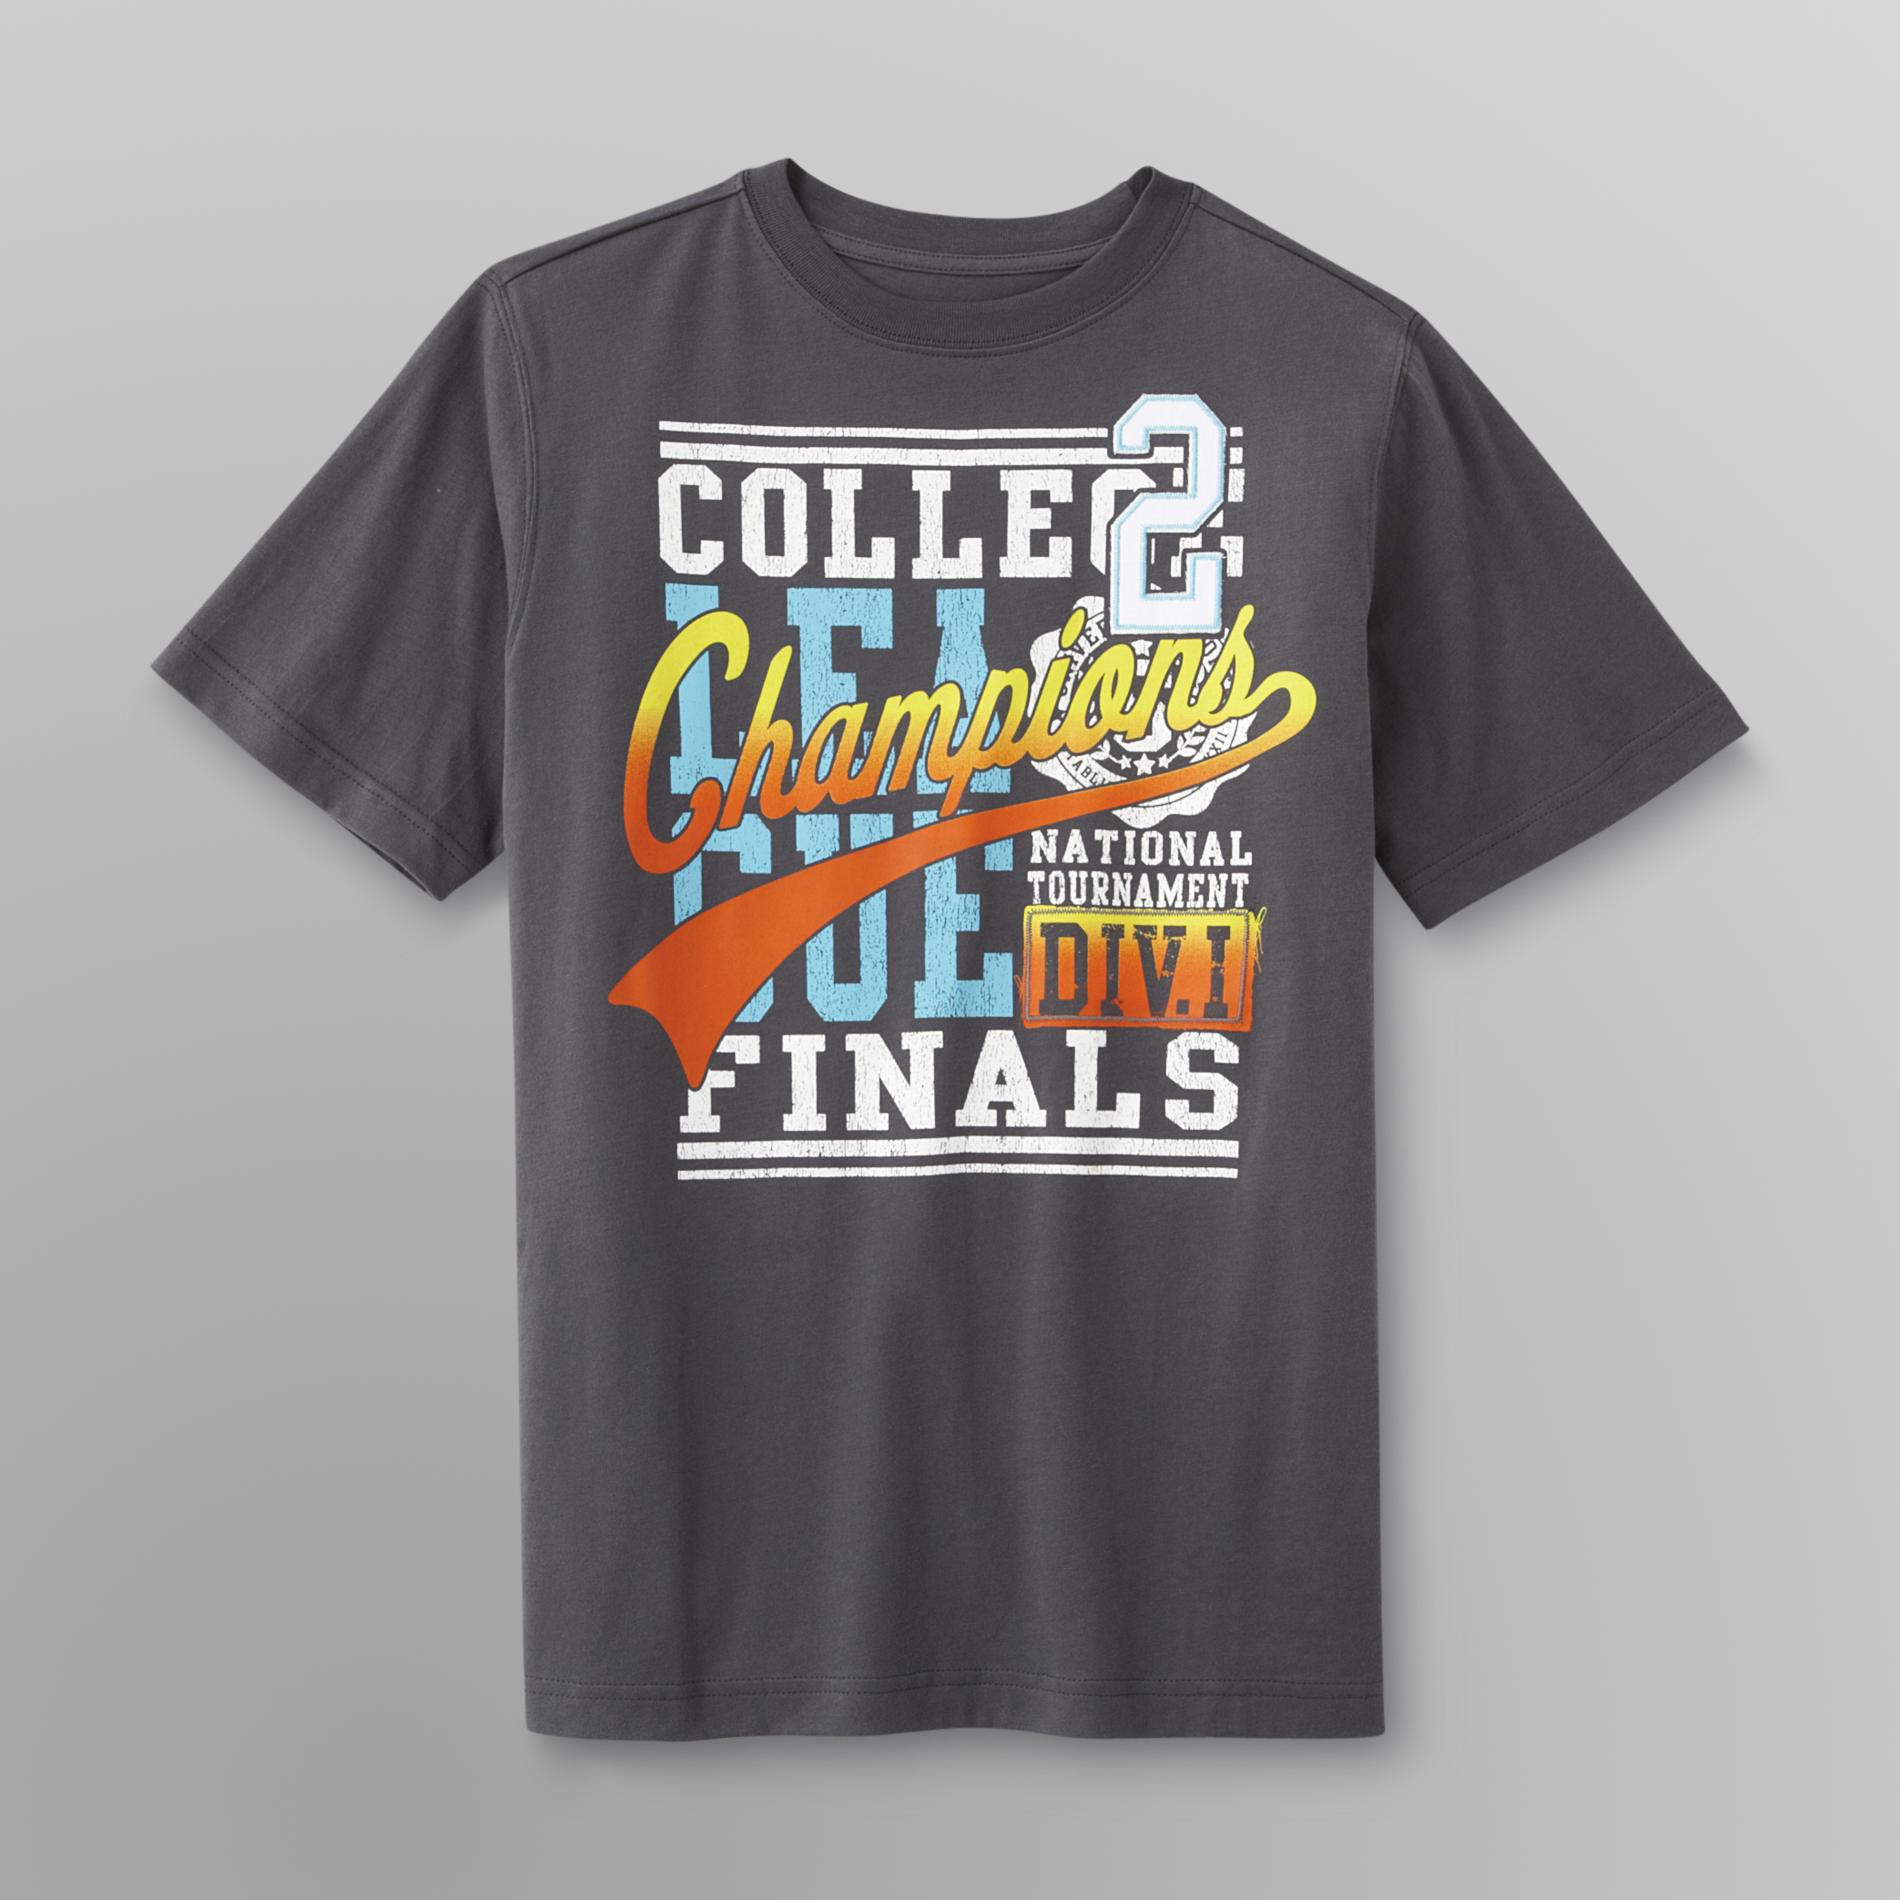 Canyon River Blues Boy's Graphic T-Shirt - Sports